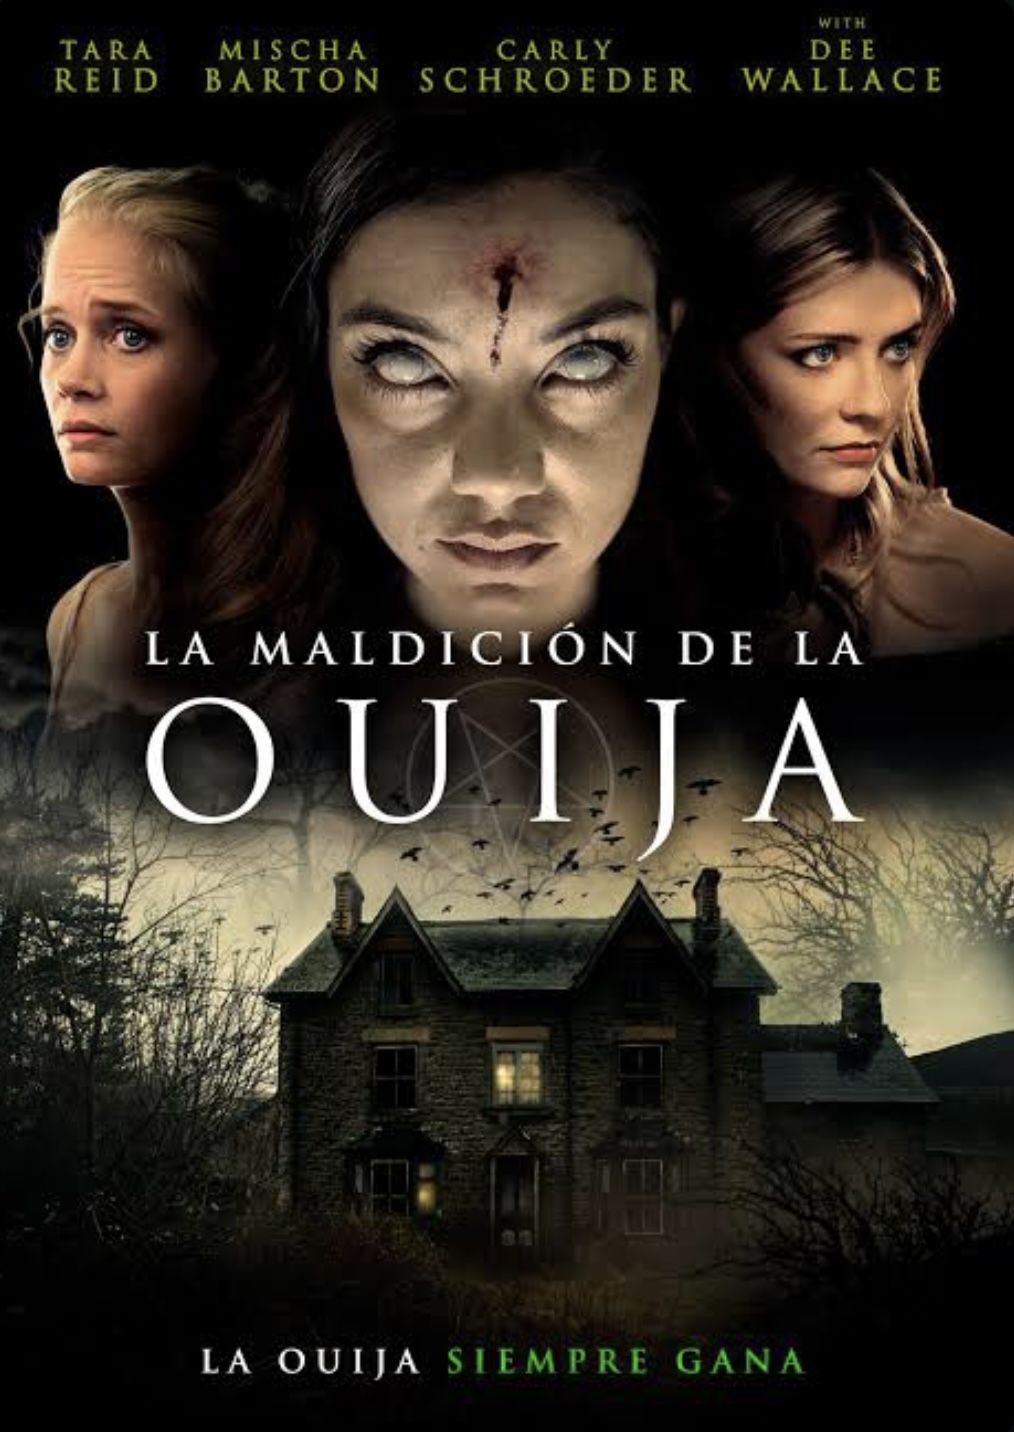 Ouija House (2018) Hindi Dubbed Movie